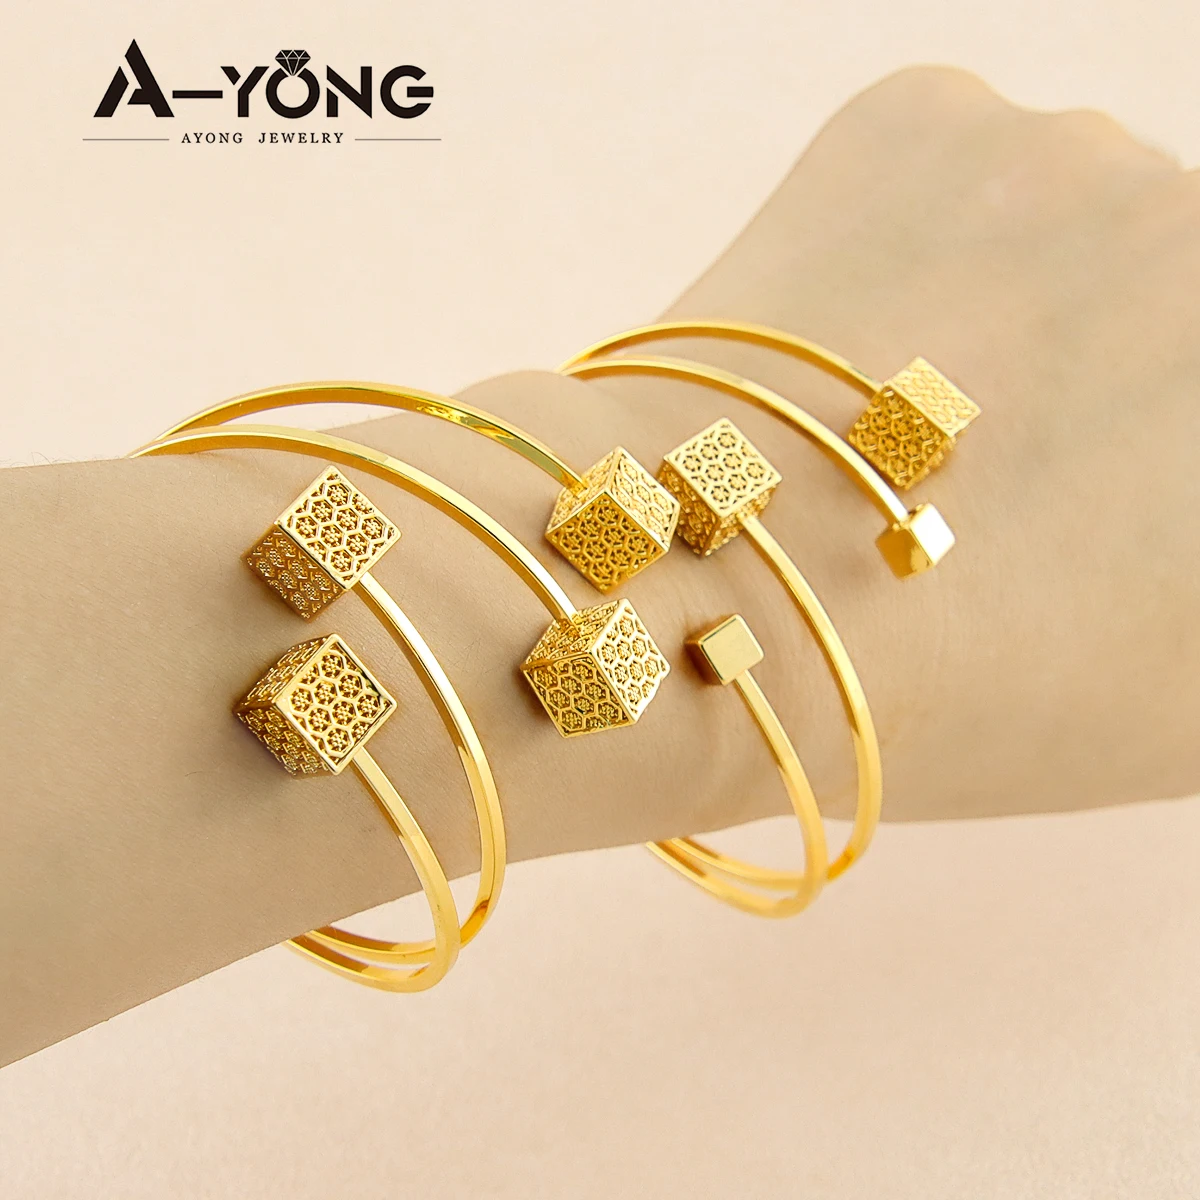 

AYONG Italian Charm Bracelet Ring Set 21k Gold Plated Dubai Elegant Square Adjustable Cuff Bangle Woman Wedding Party Event Gift